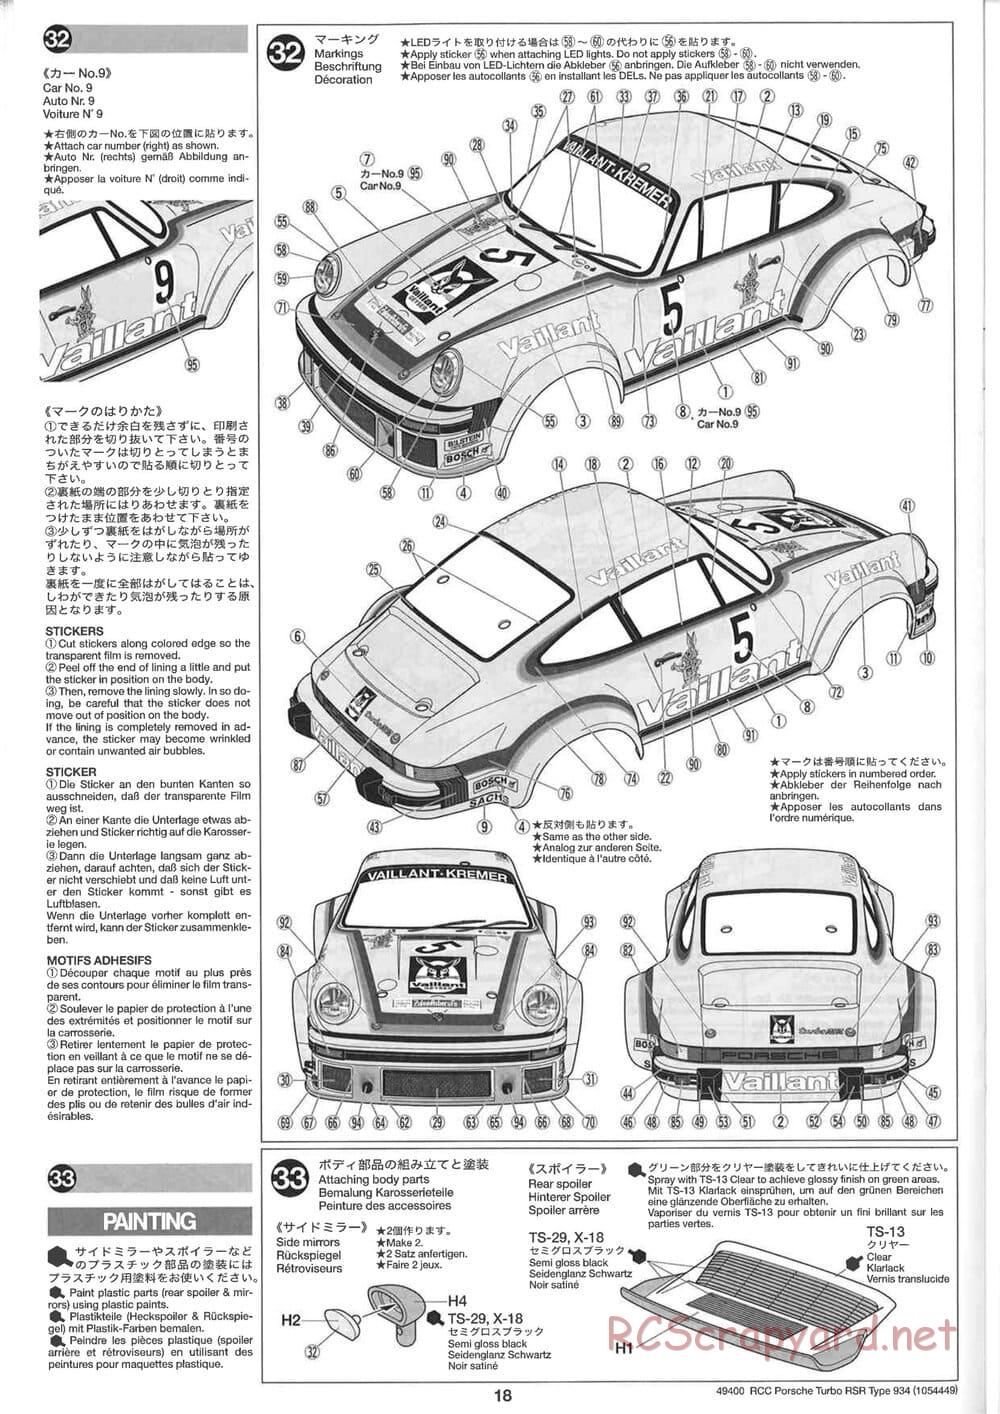 Tamiya - Porsche Turbo RSR Type 934 - TA05 Chassis - Manual - Page 18